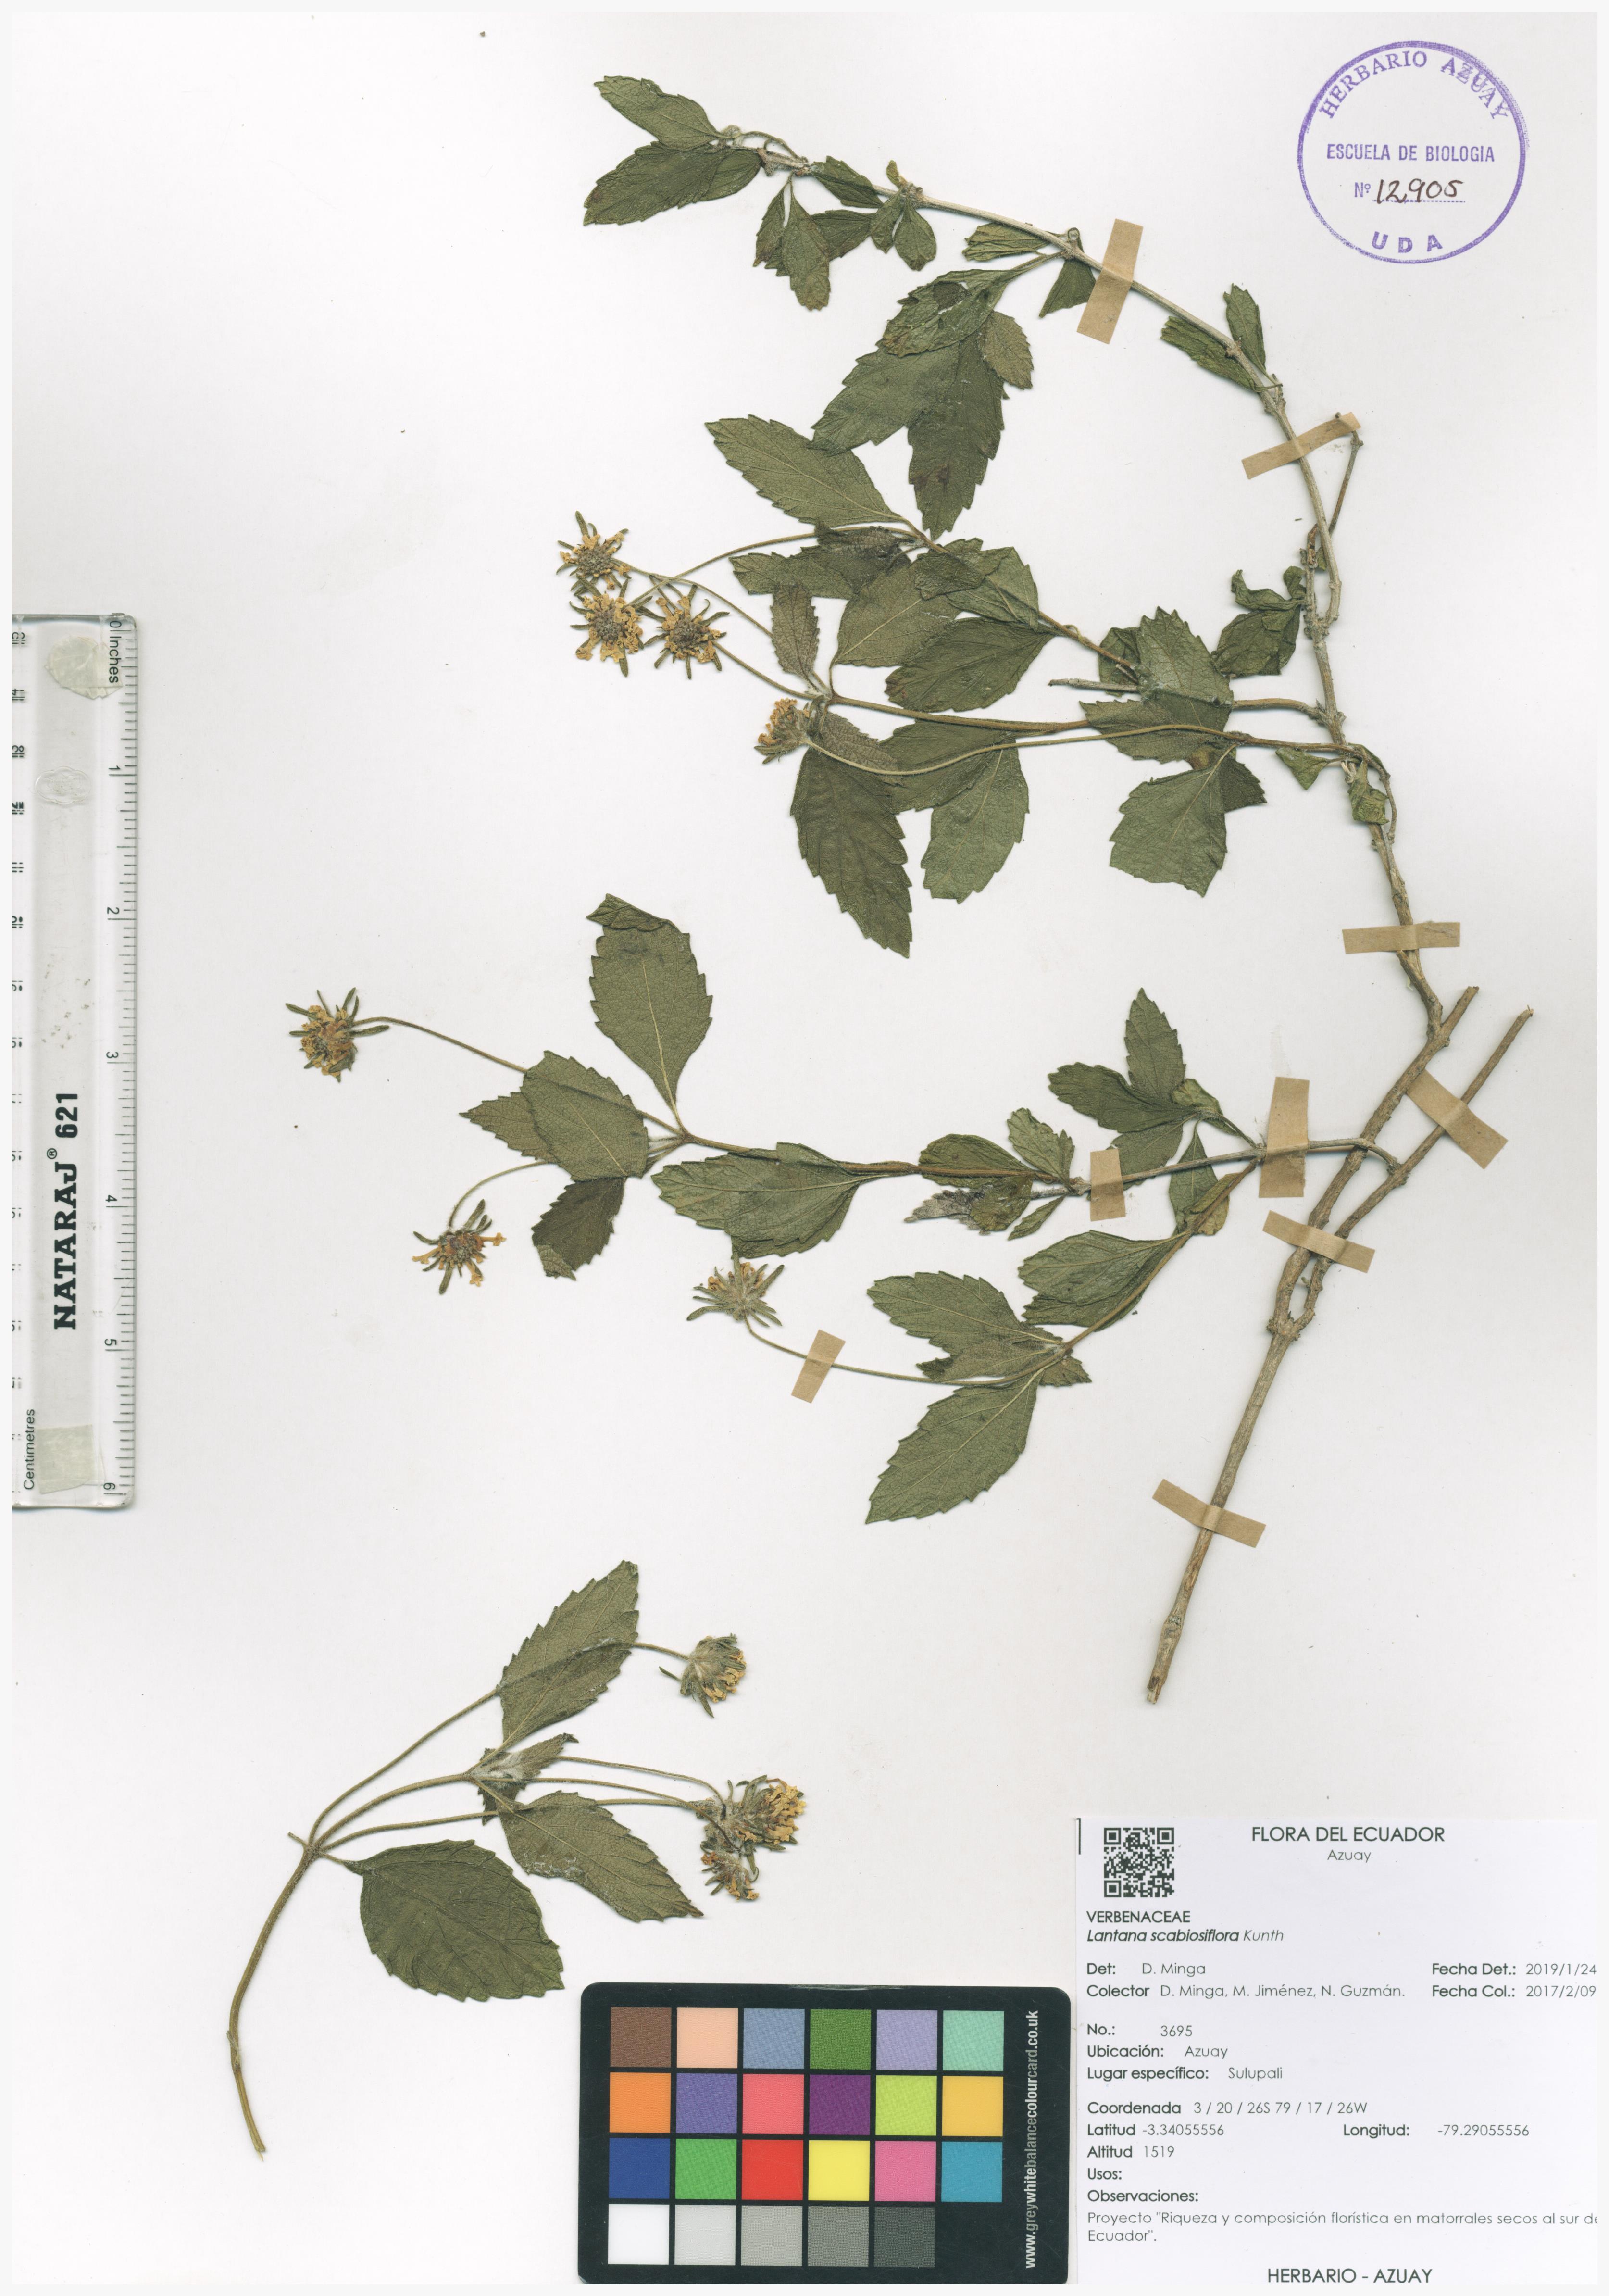 Lantana scabiosiflora Kunth